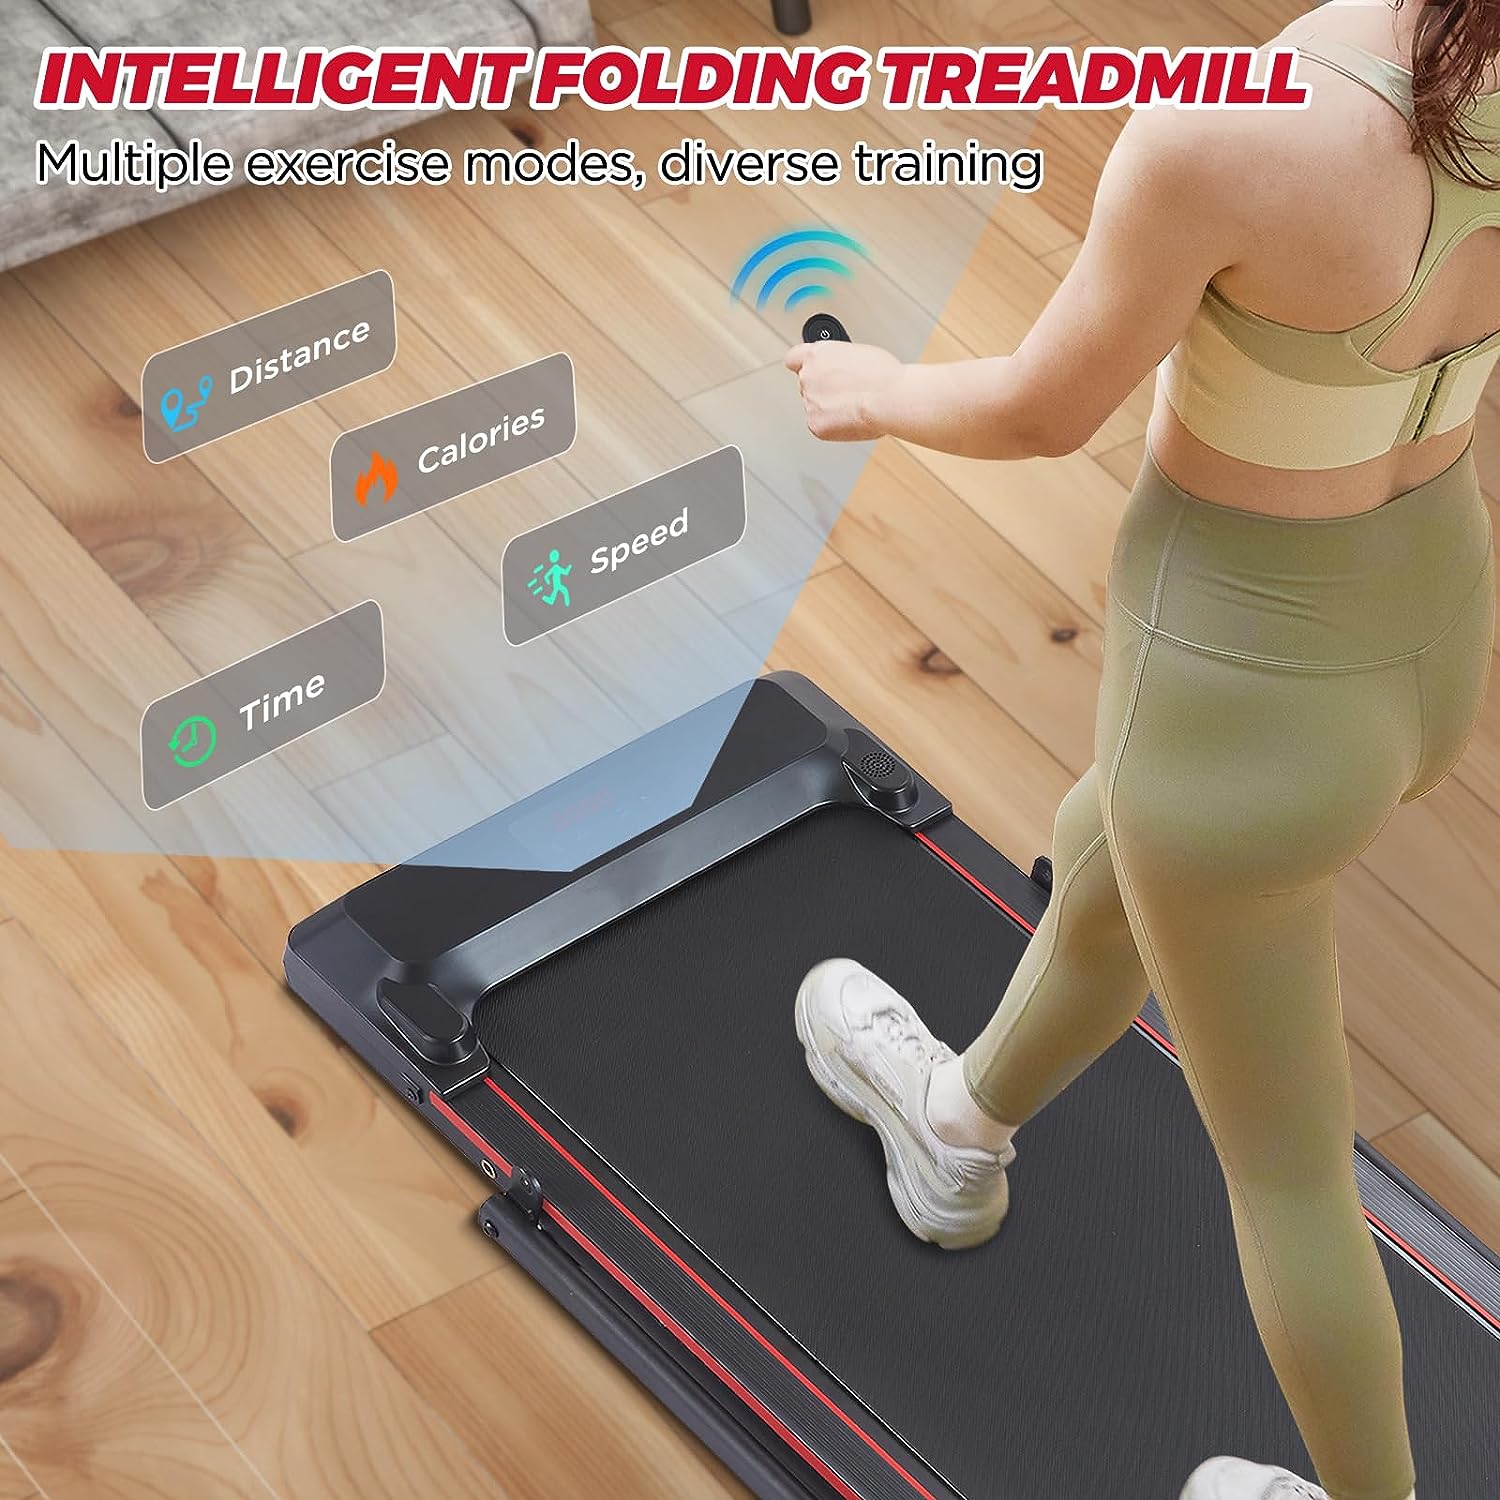 Walking Pad Treadmill Under Desk Treadmill 2.5HP Foldable Treadmill with Remote Control Portable Treadmill 2 in 1 Compact Treadmill Free Installation Quiet Treadmill Foldable with LED Display for Home